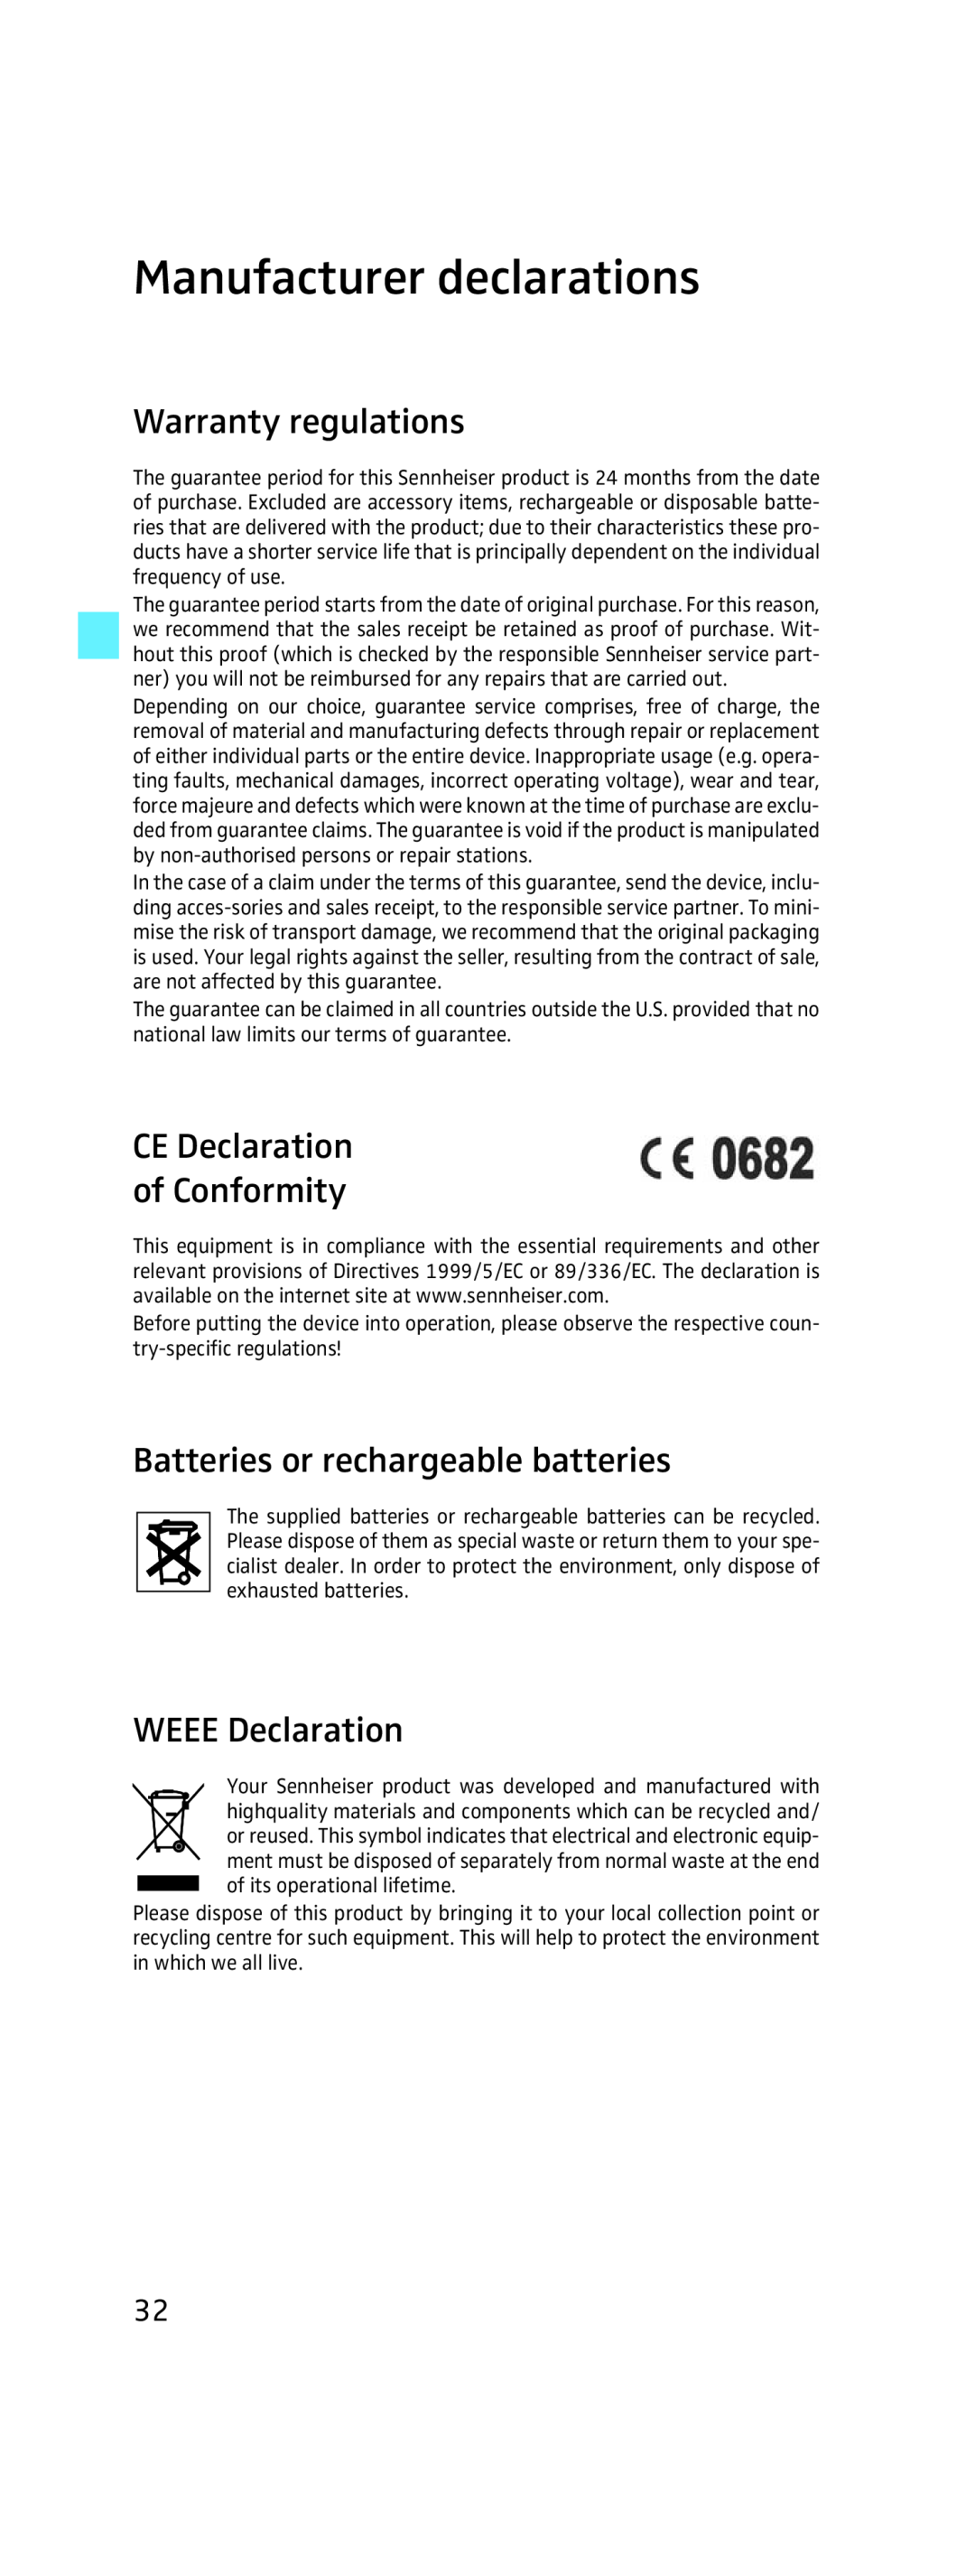 Sennheiser EK 500 G2 manual Manufacturer declarations, Warranty regulations, CE Declaration of Conformity, WEEE Declaration 